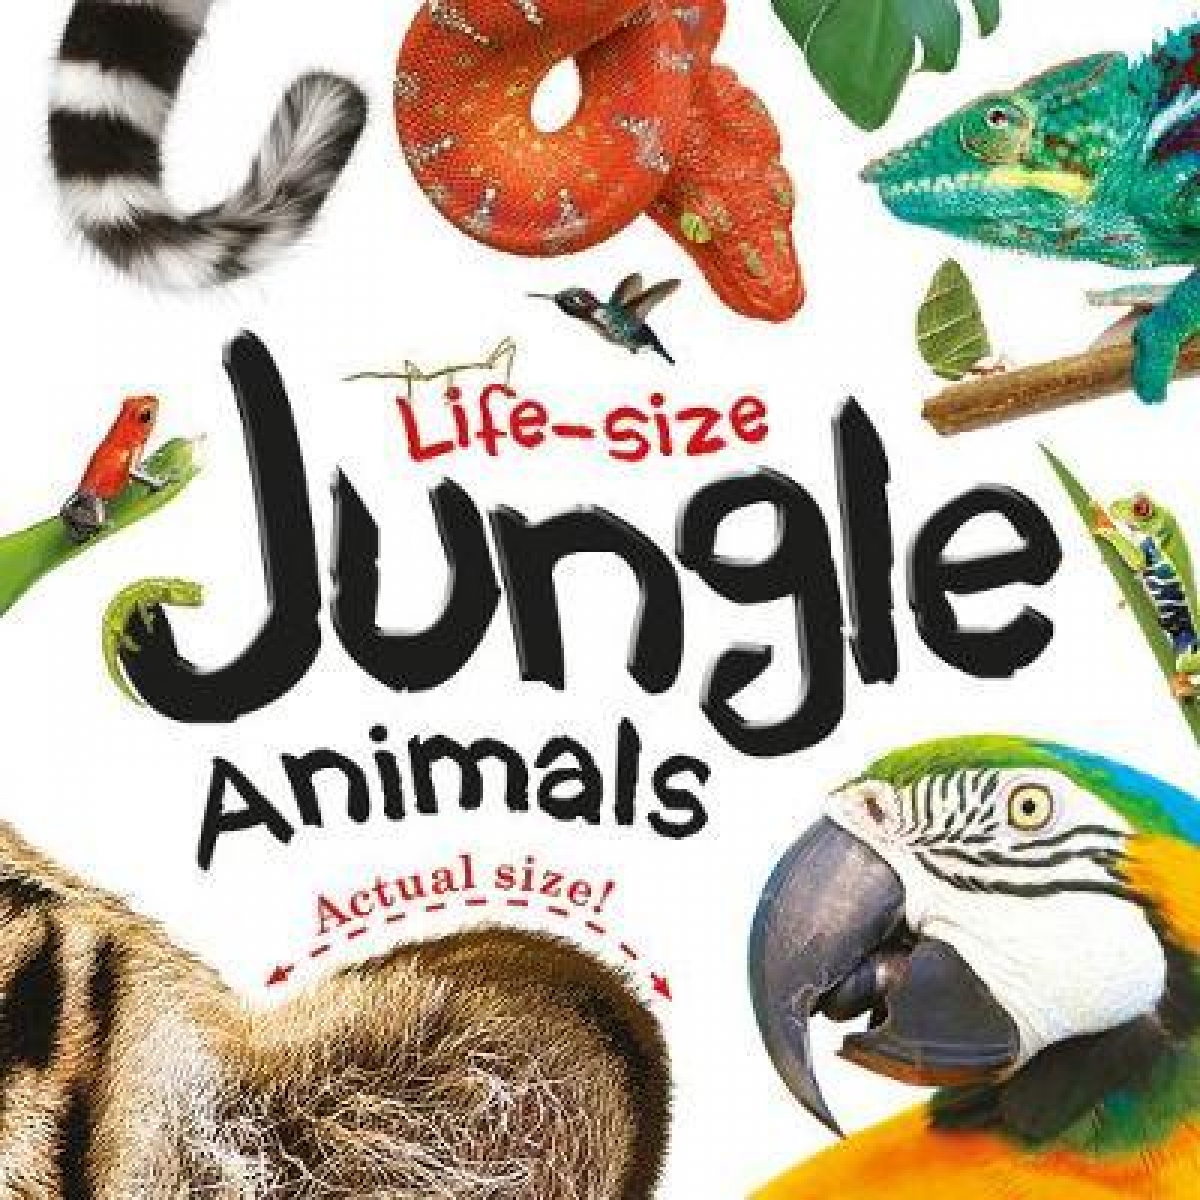 Life-size. Jungle Animals 